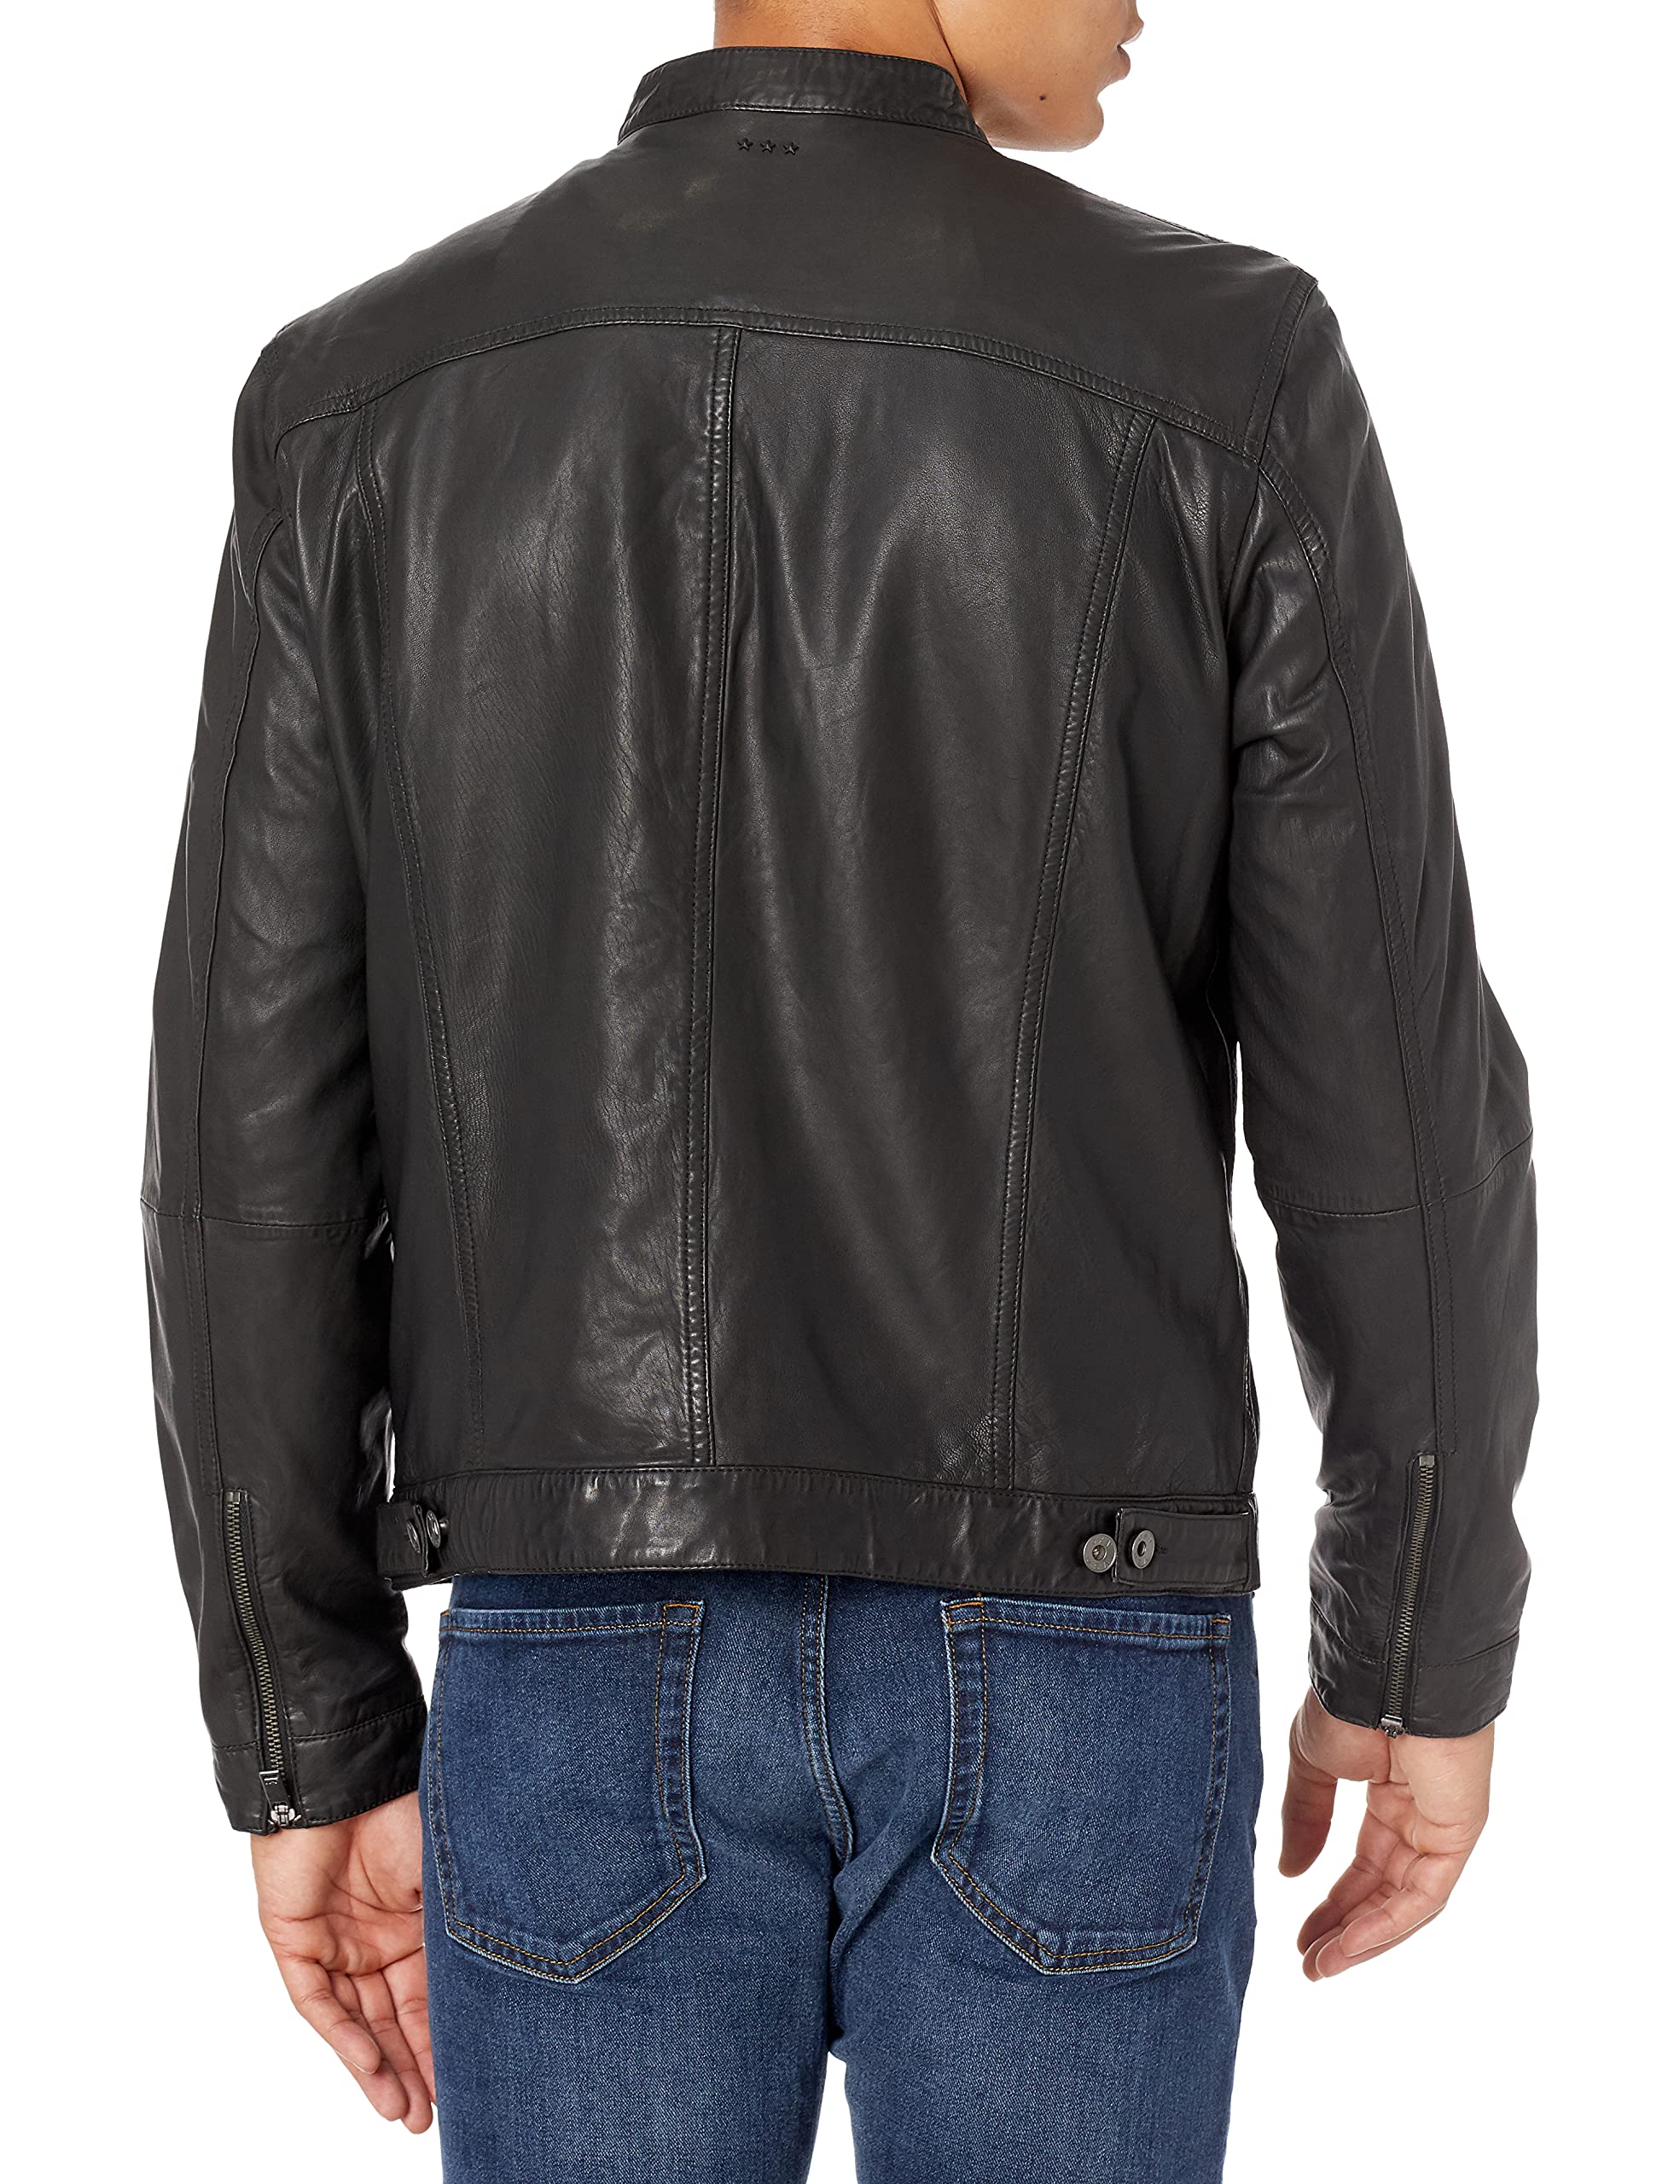 John Varvatos Star USA Men's Brando Band Collar Leather Jacket